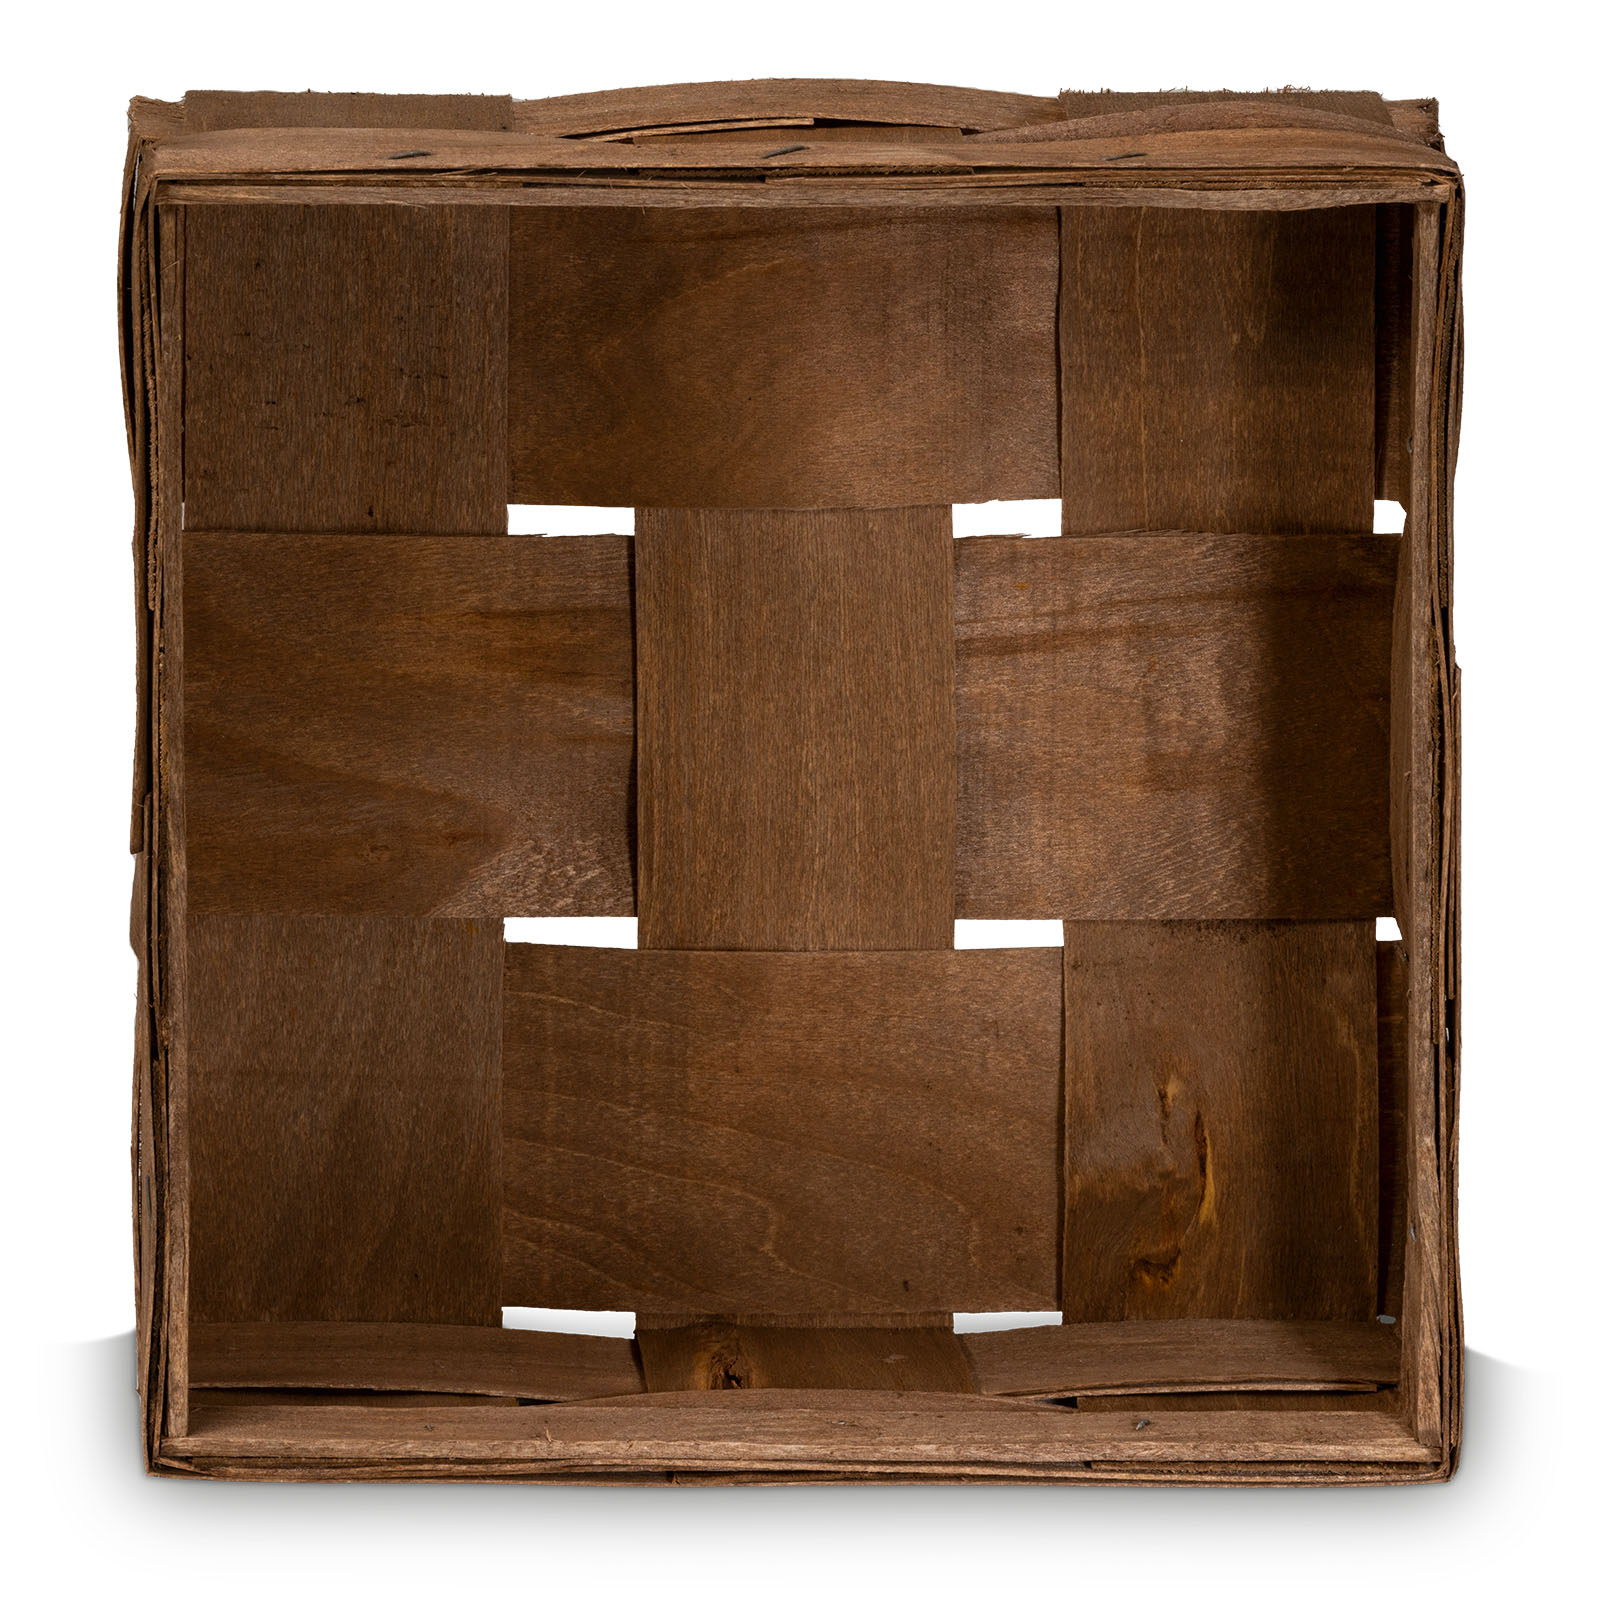 Holzspankorb Quadratisch braun 250 x 250 x 80 mm